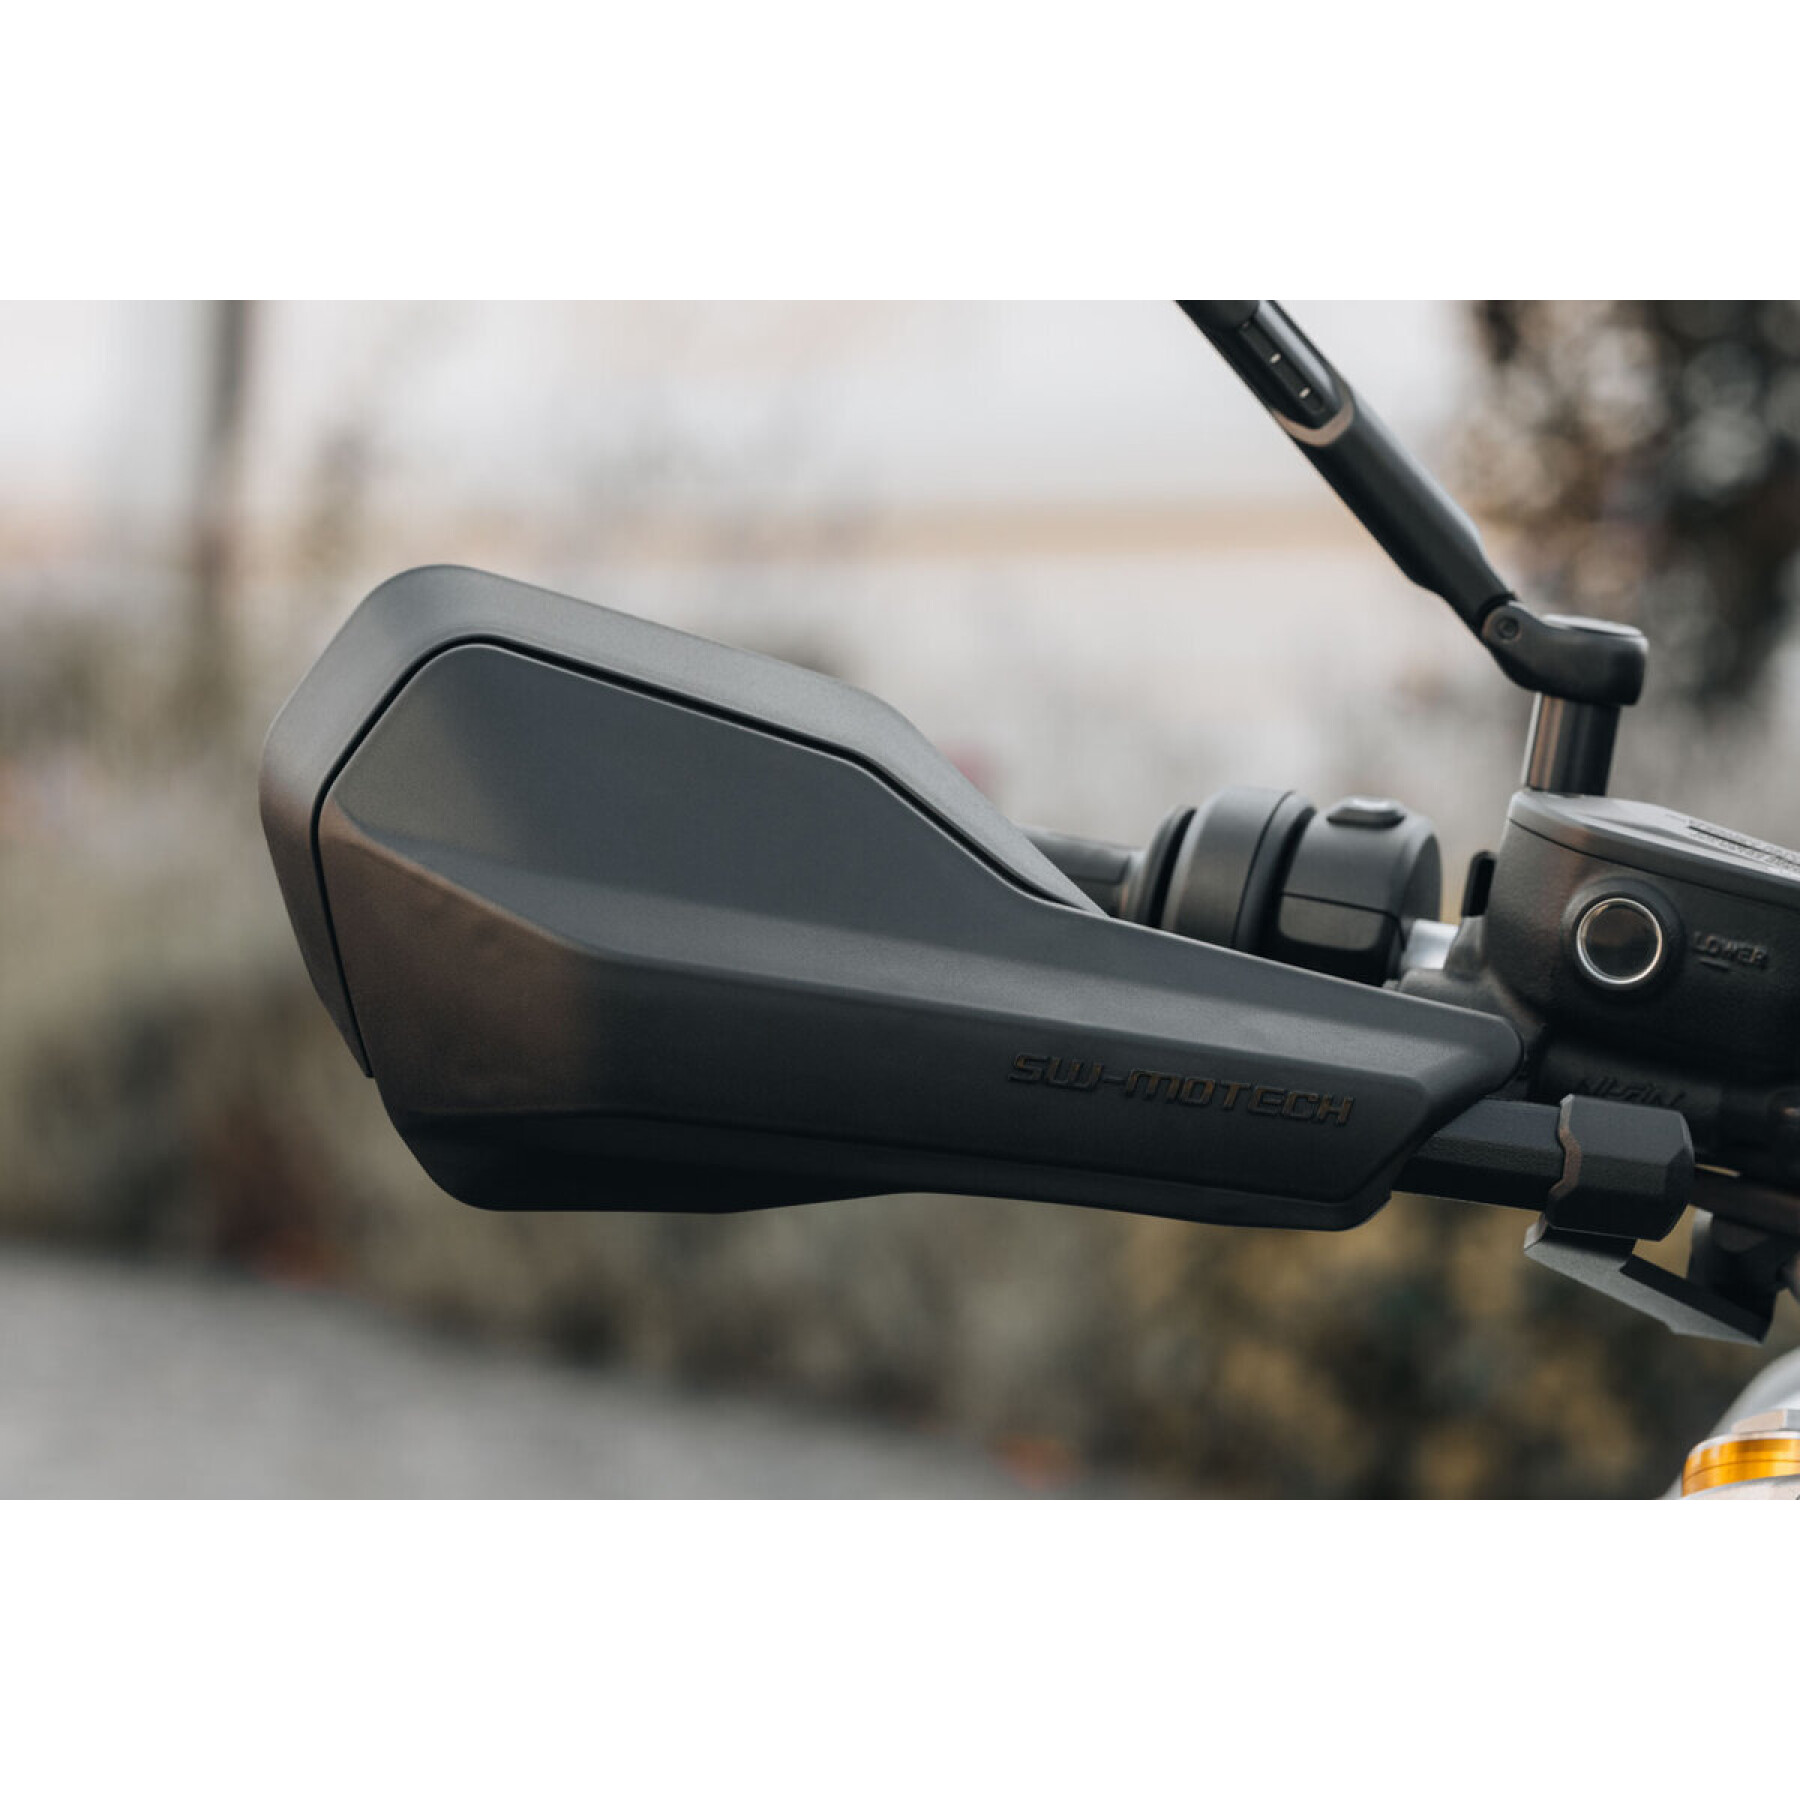 Motorcycle handguard kit SW-Motech Sport Honda NC700 (11-14) / NC750 (14-)